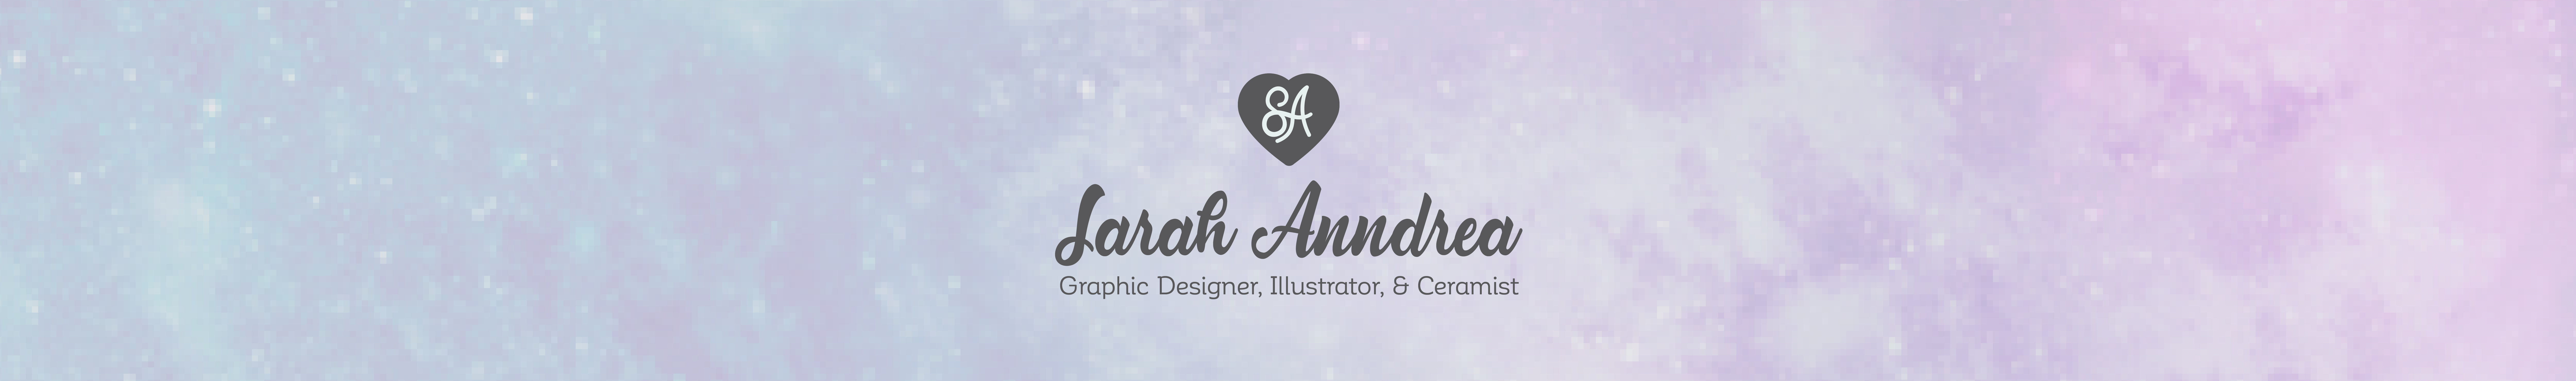 Banner de perfil de Sarah Anndrea White